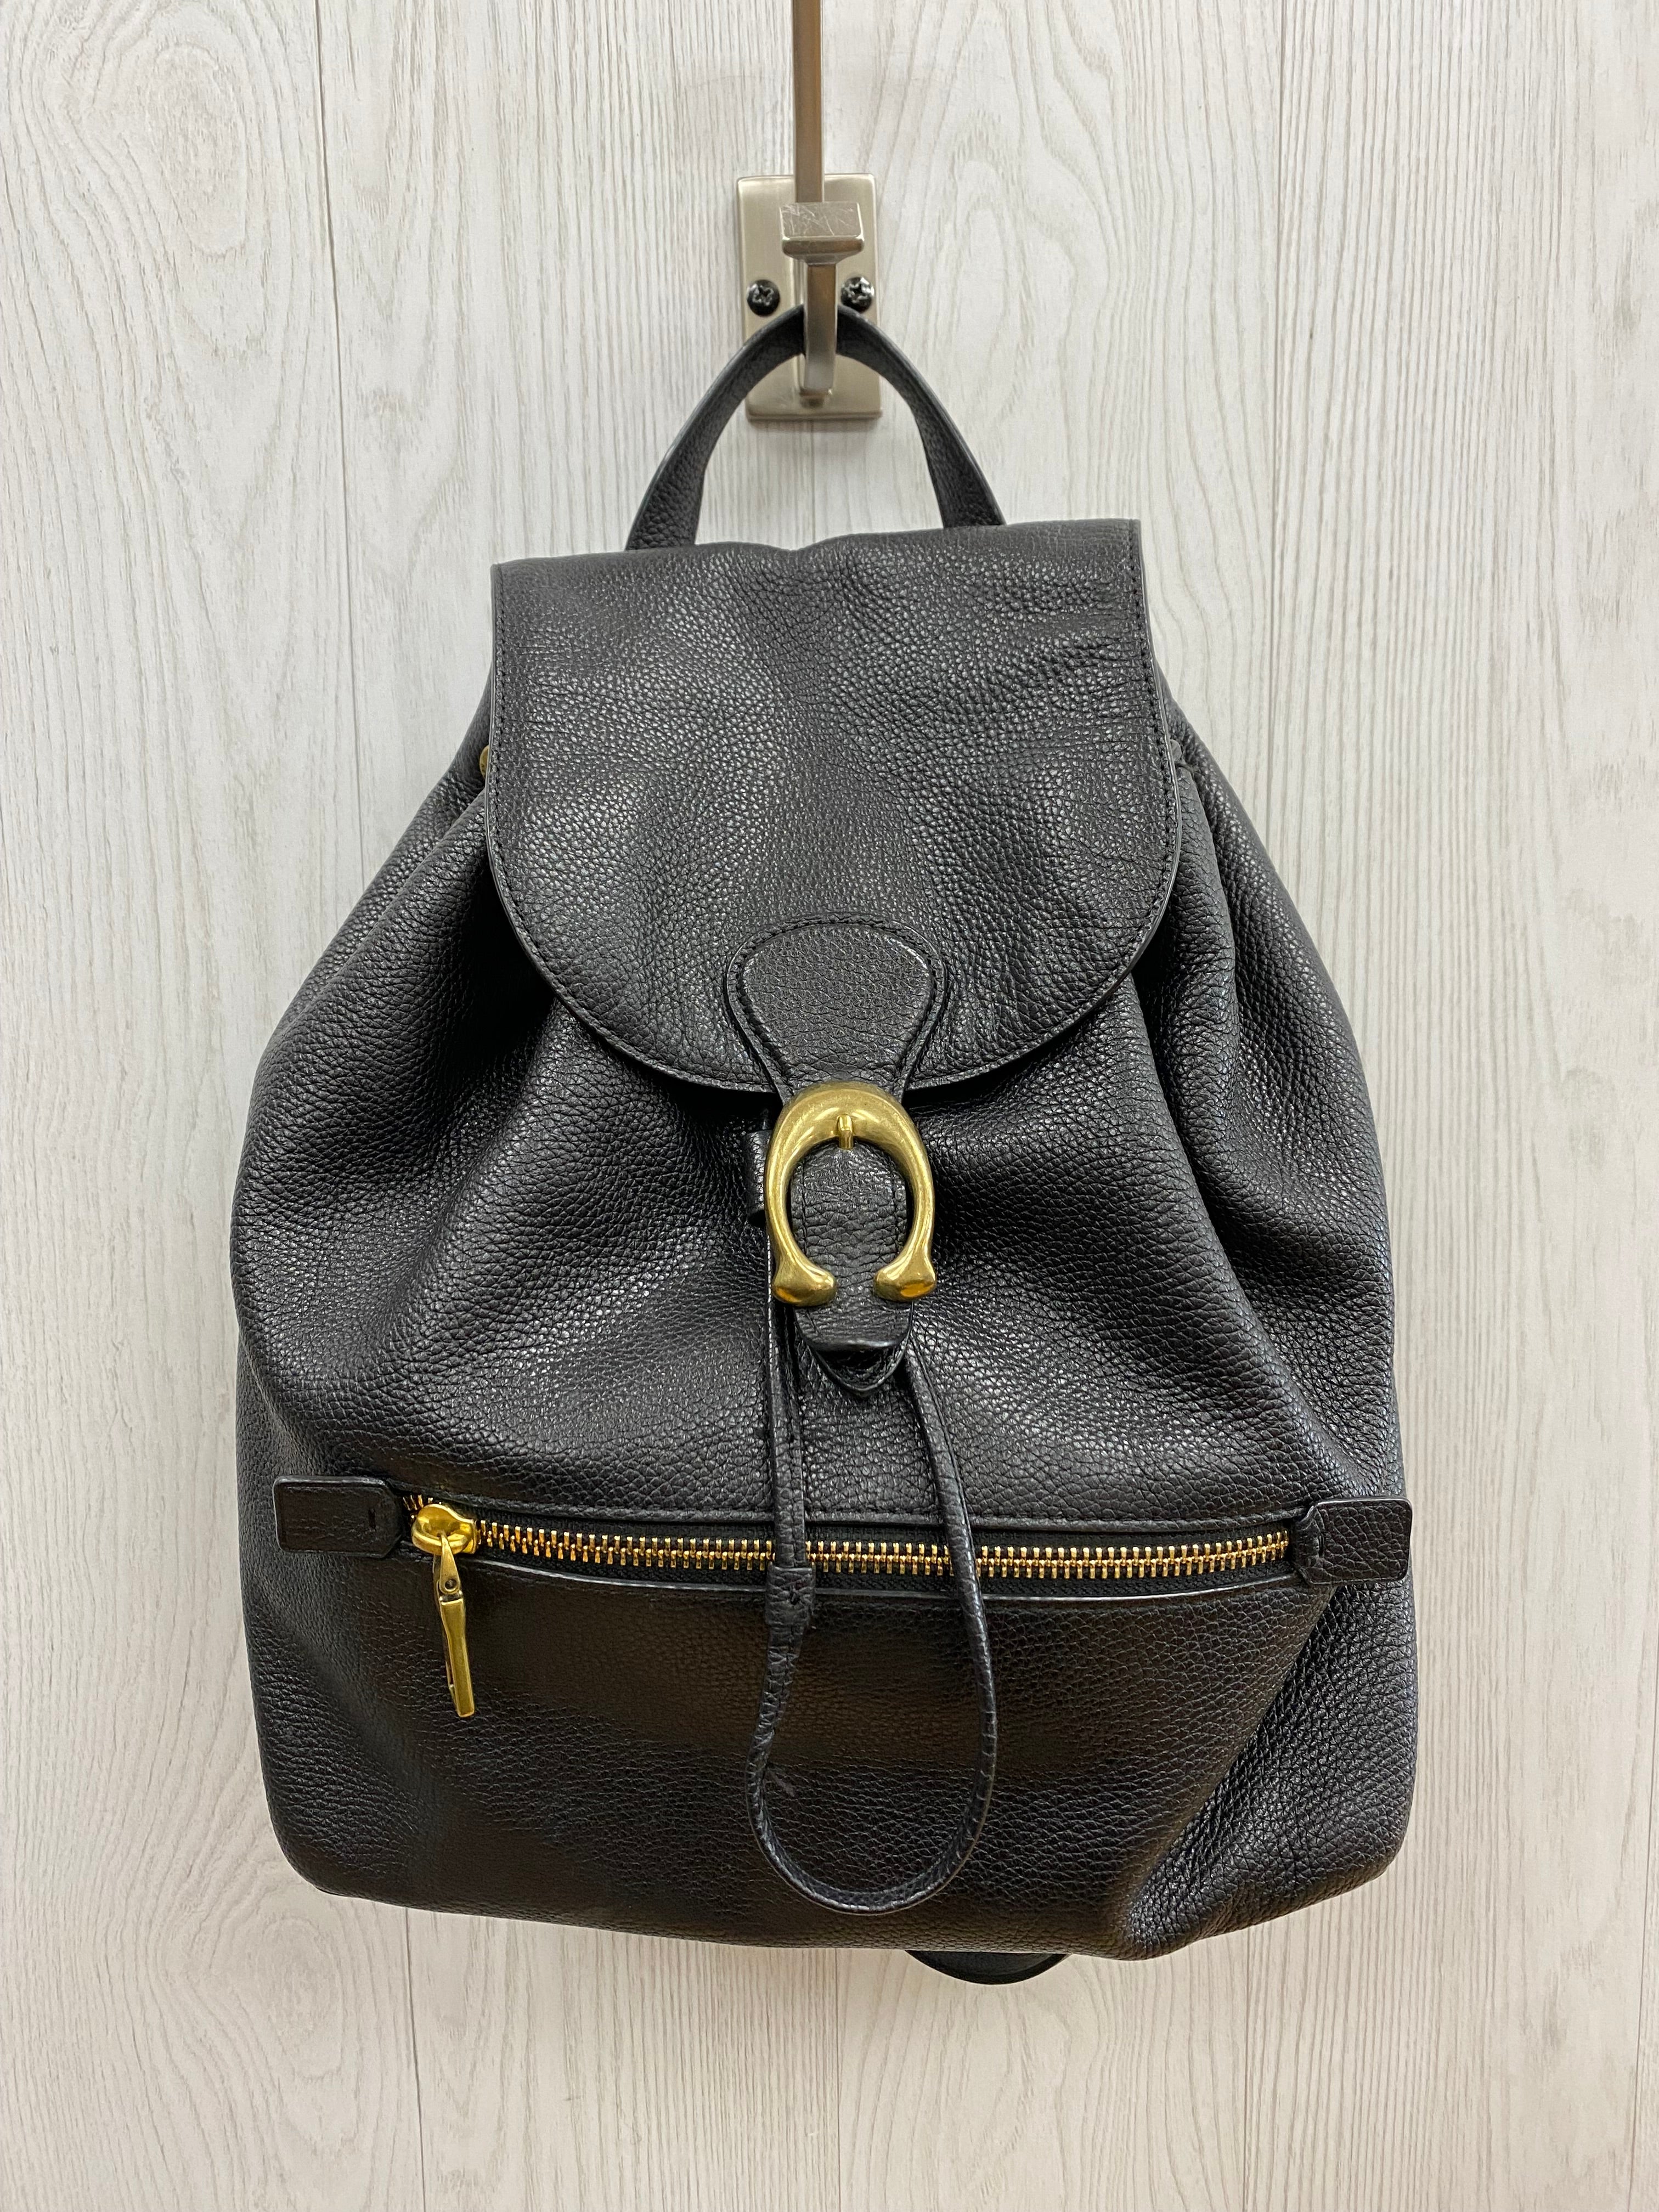 Le Donne Leather Women's Sling Backpack/Purse - QVC.com